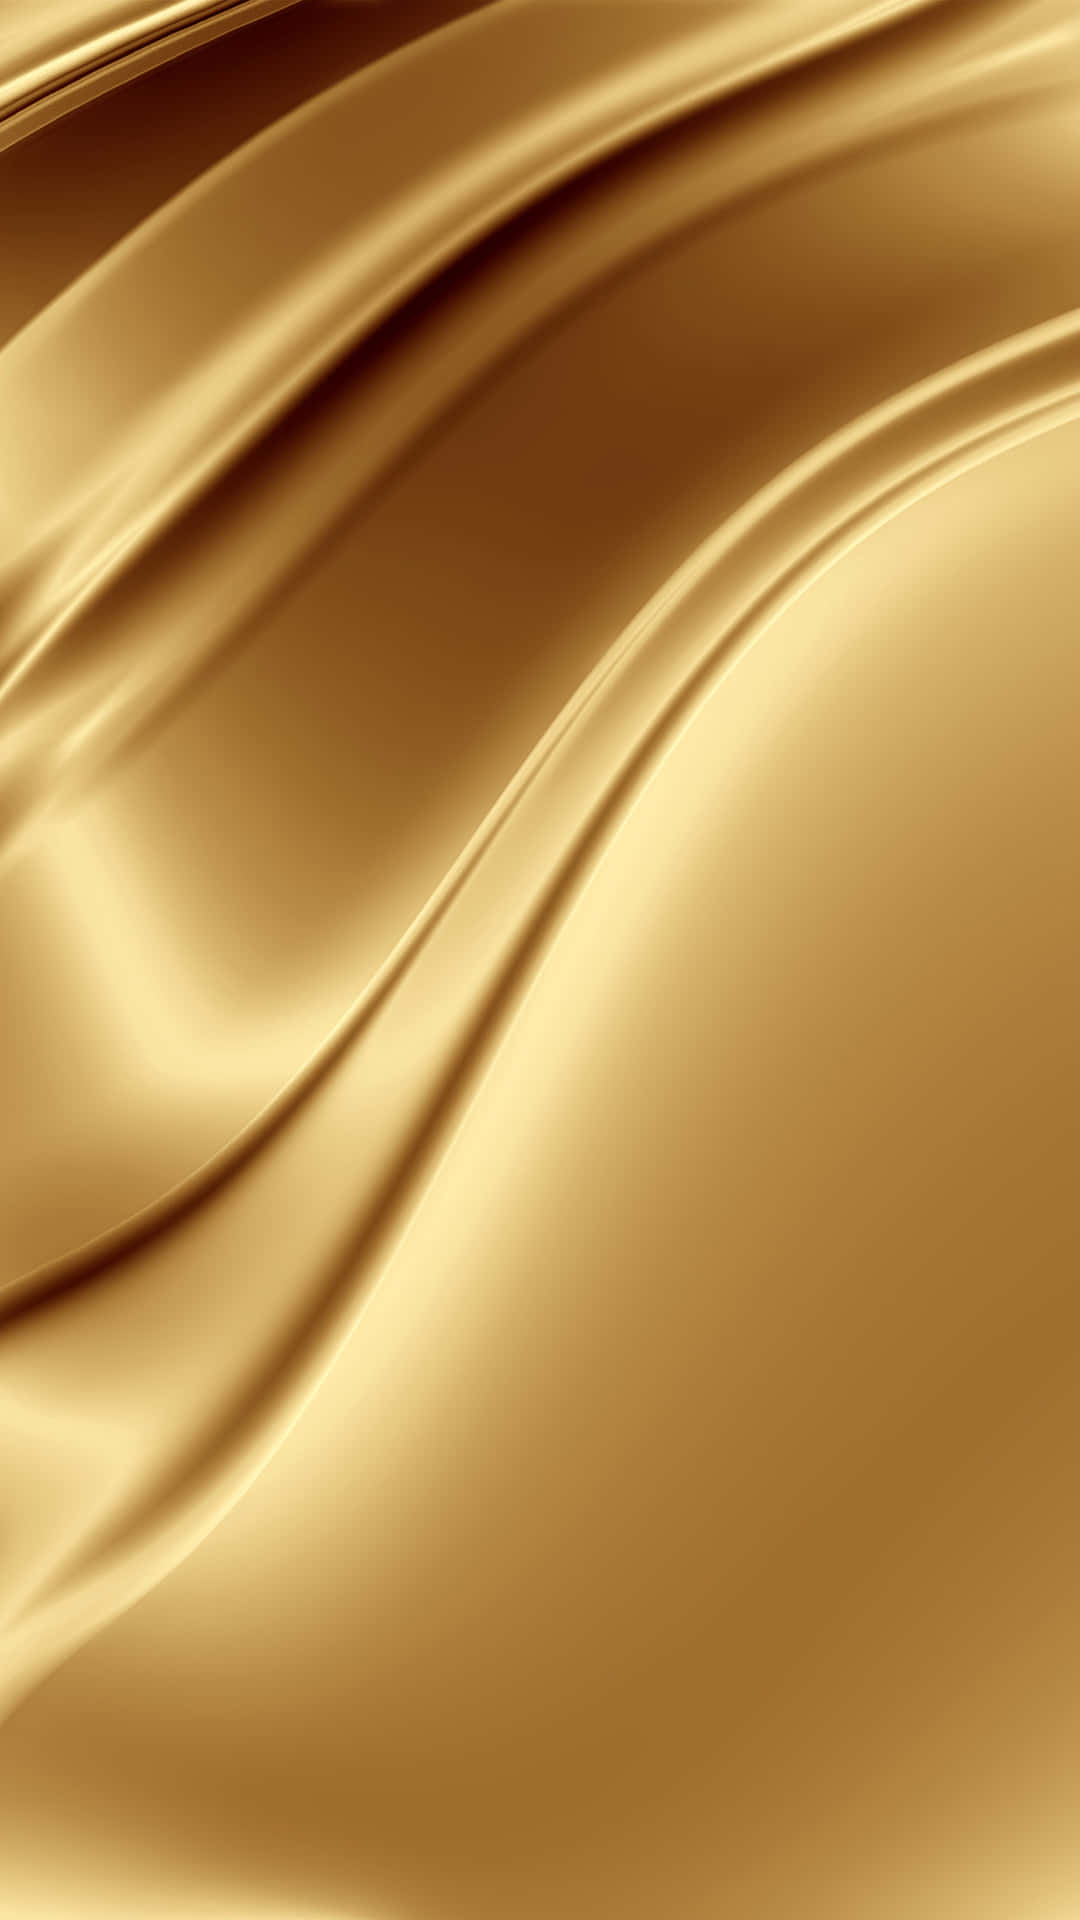 gold iphone wallpaper